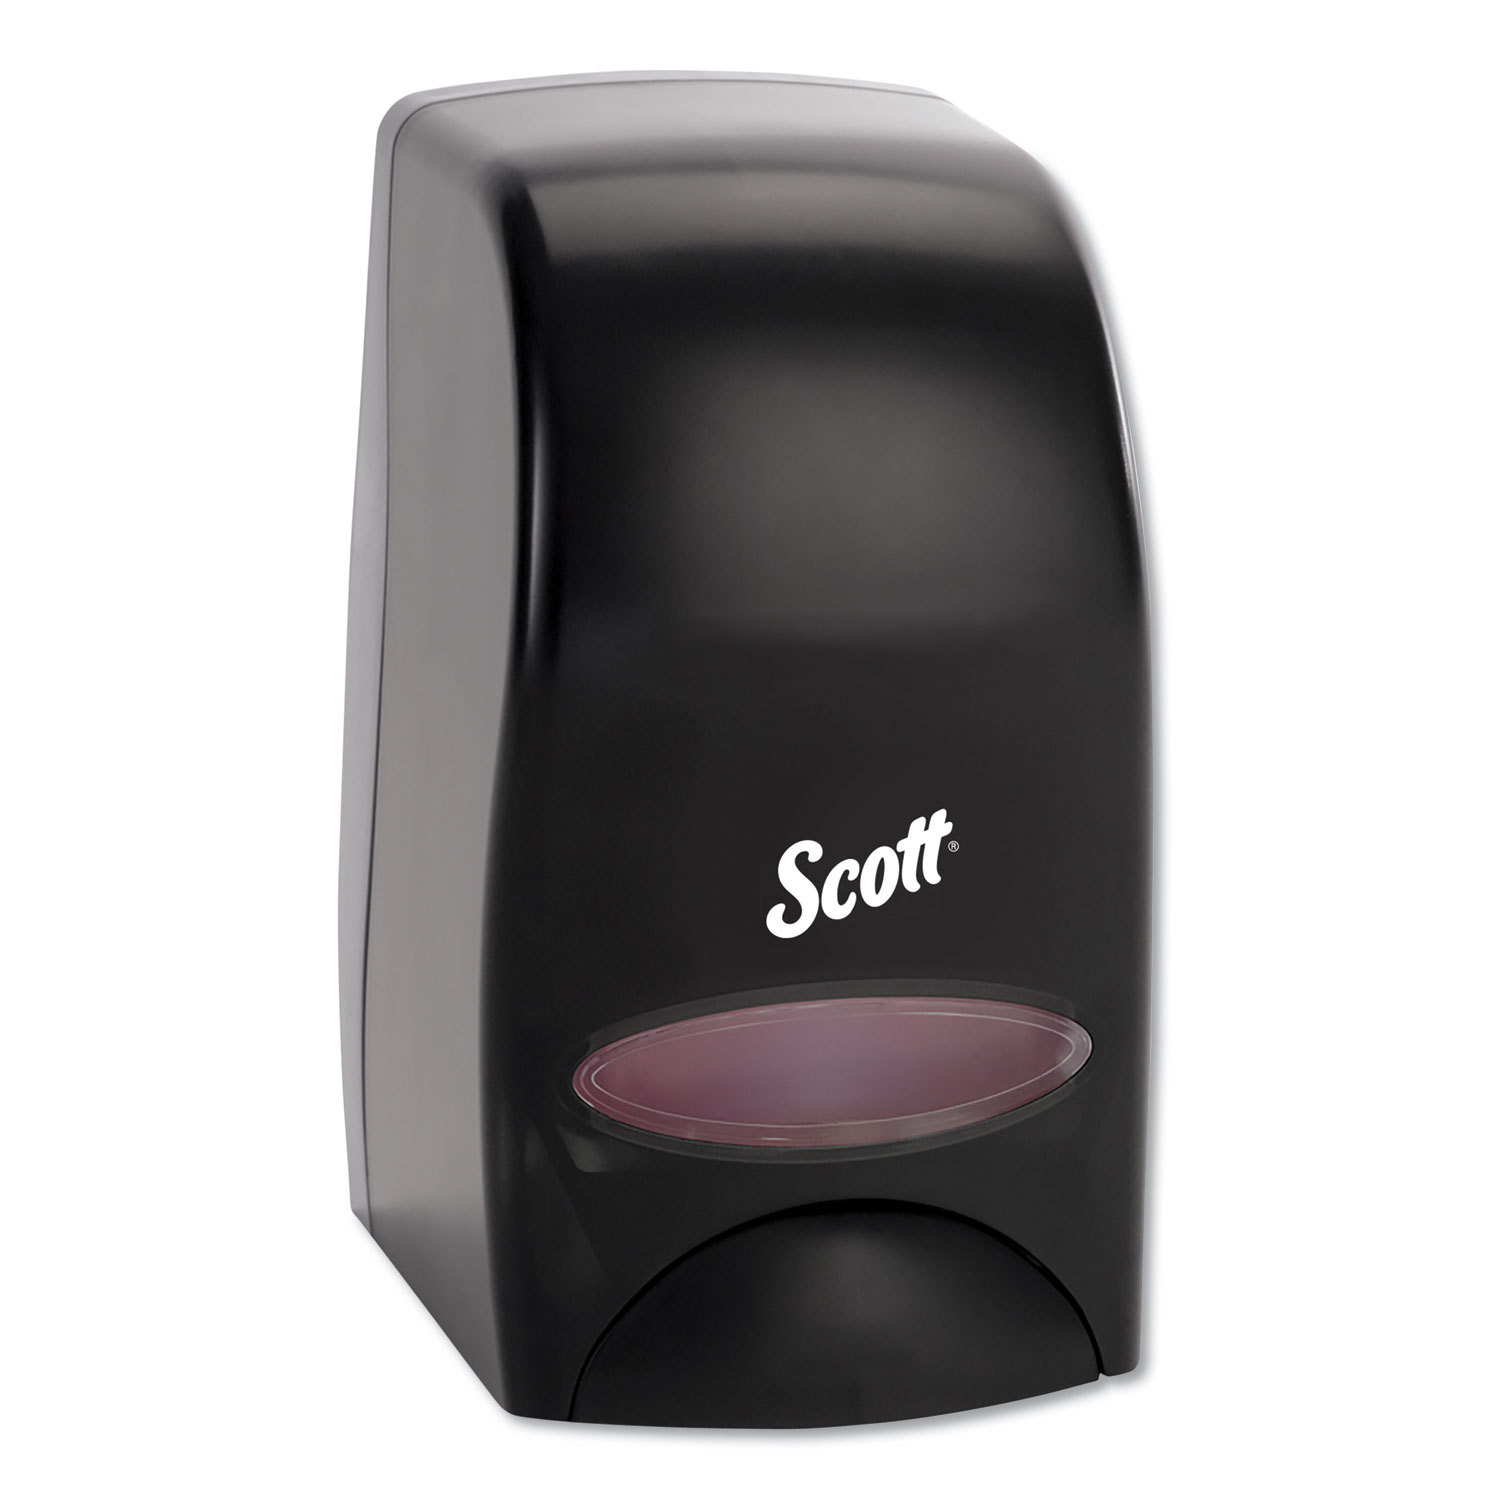  Scott KCC 92145 Essential Manual Skin Care Dispenser, 1000 mL, 5 x 5.25 x 8.38, For Traditional Business, Black (KCC92145) 